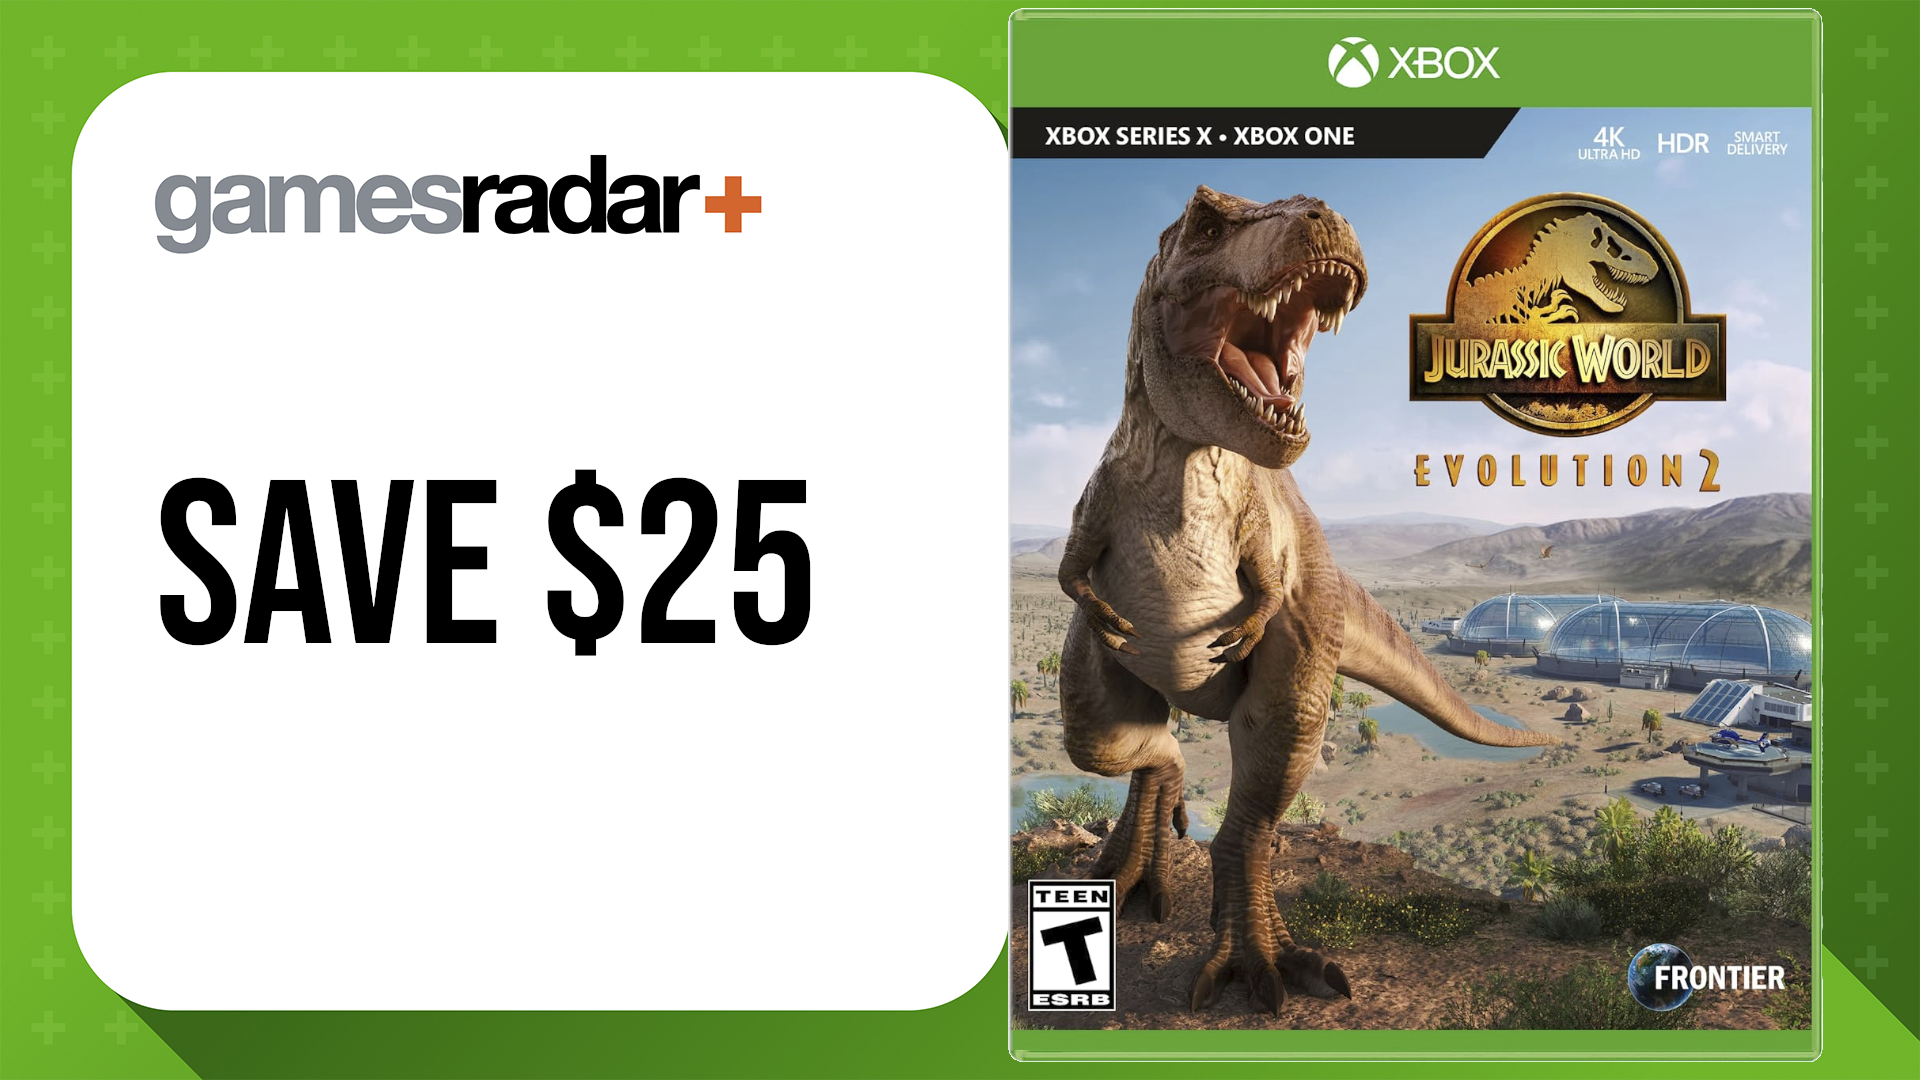 Amazon Prime Day Xbox sales with Jurassic World Evolution 2 box